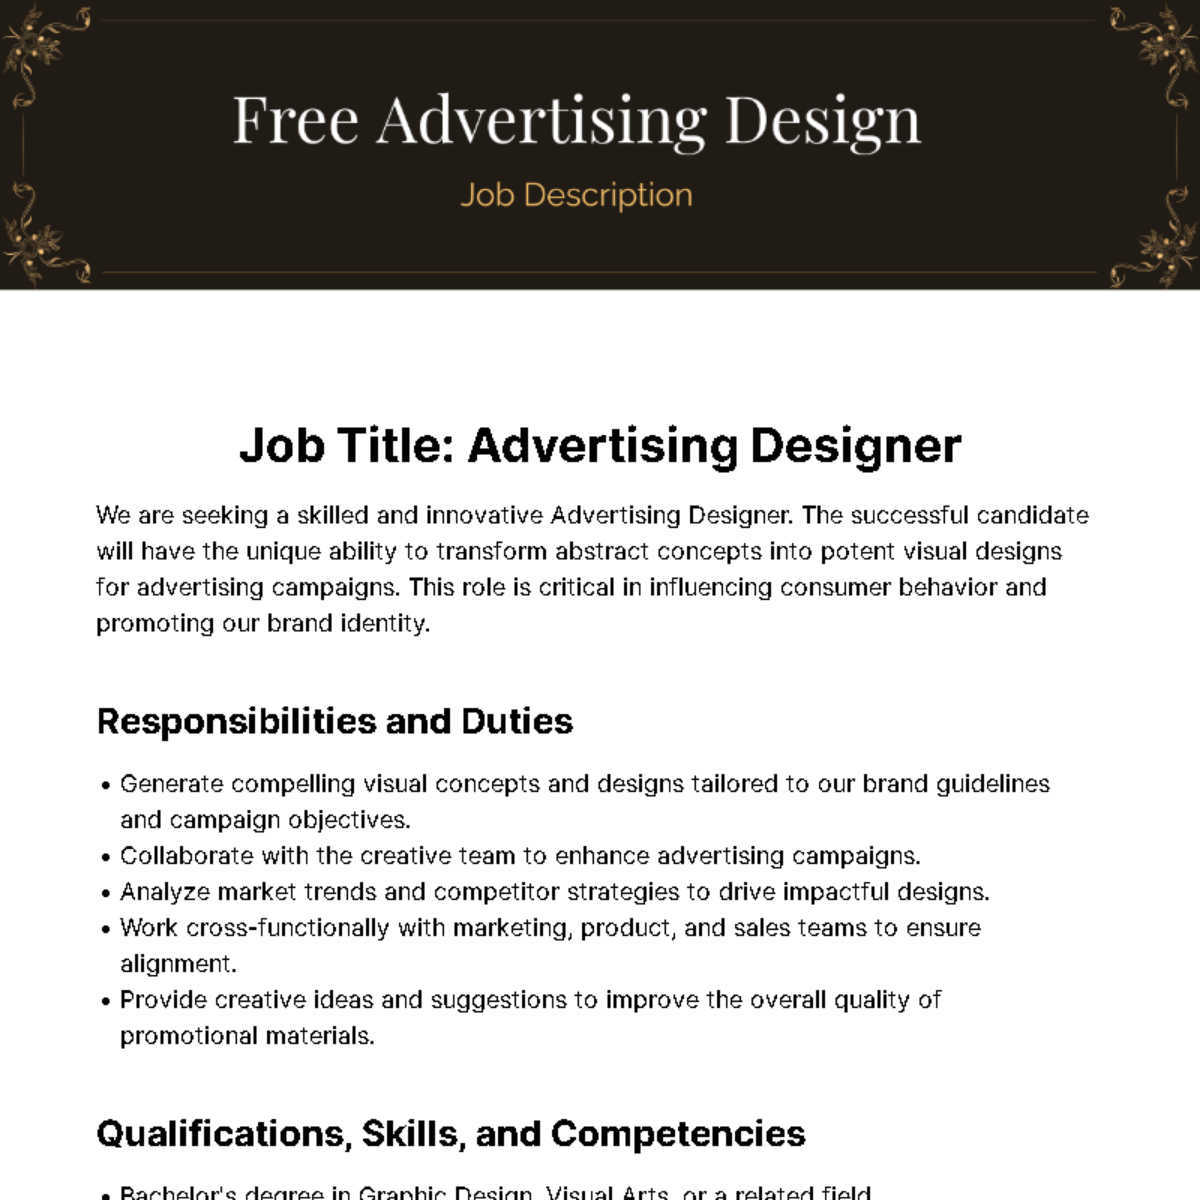 Free Advertising Design Job Description Template